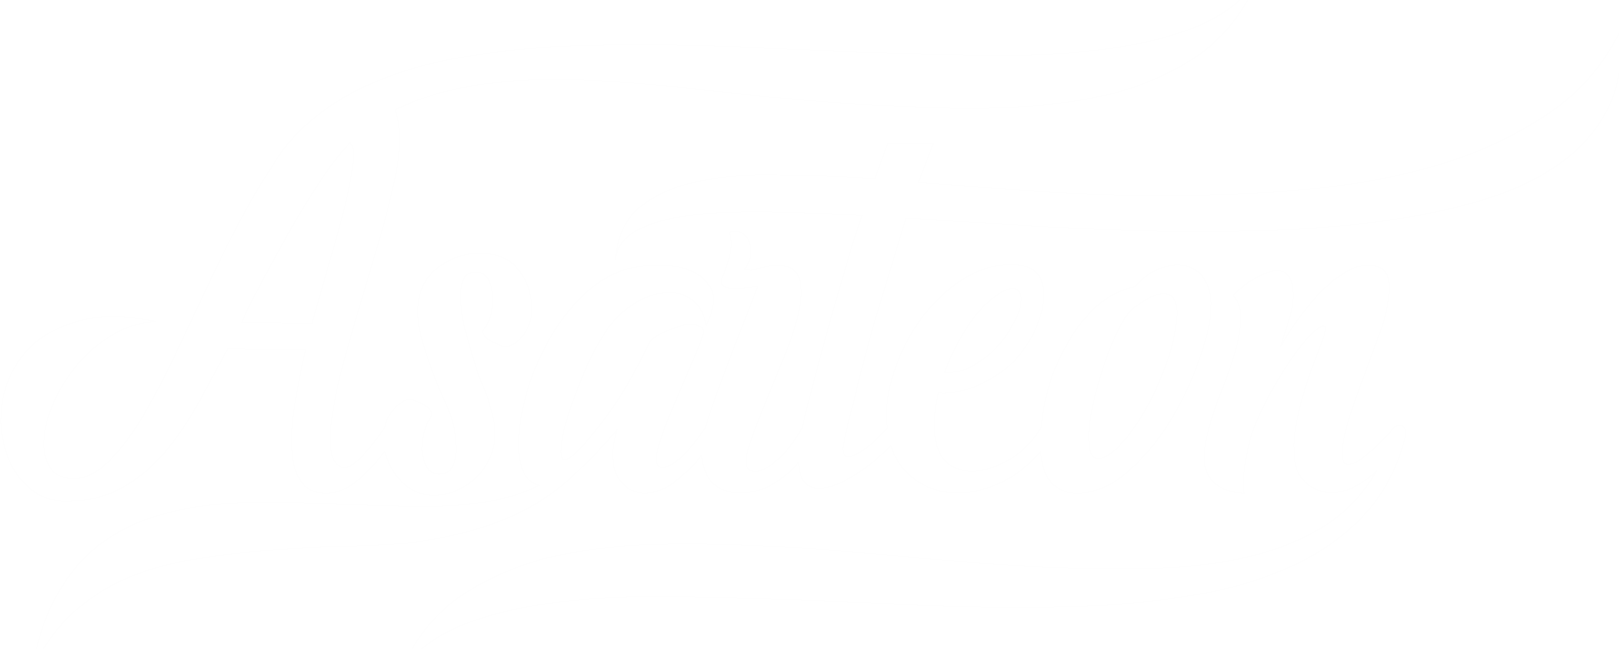 asarteon logo w